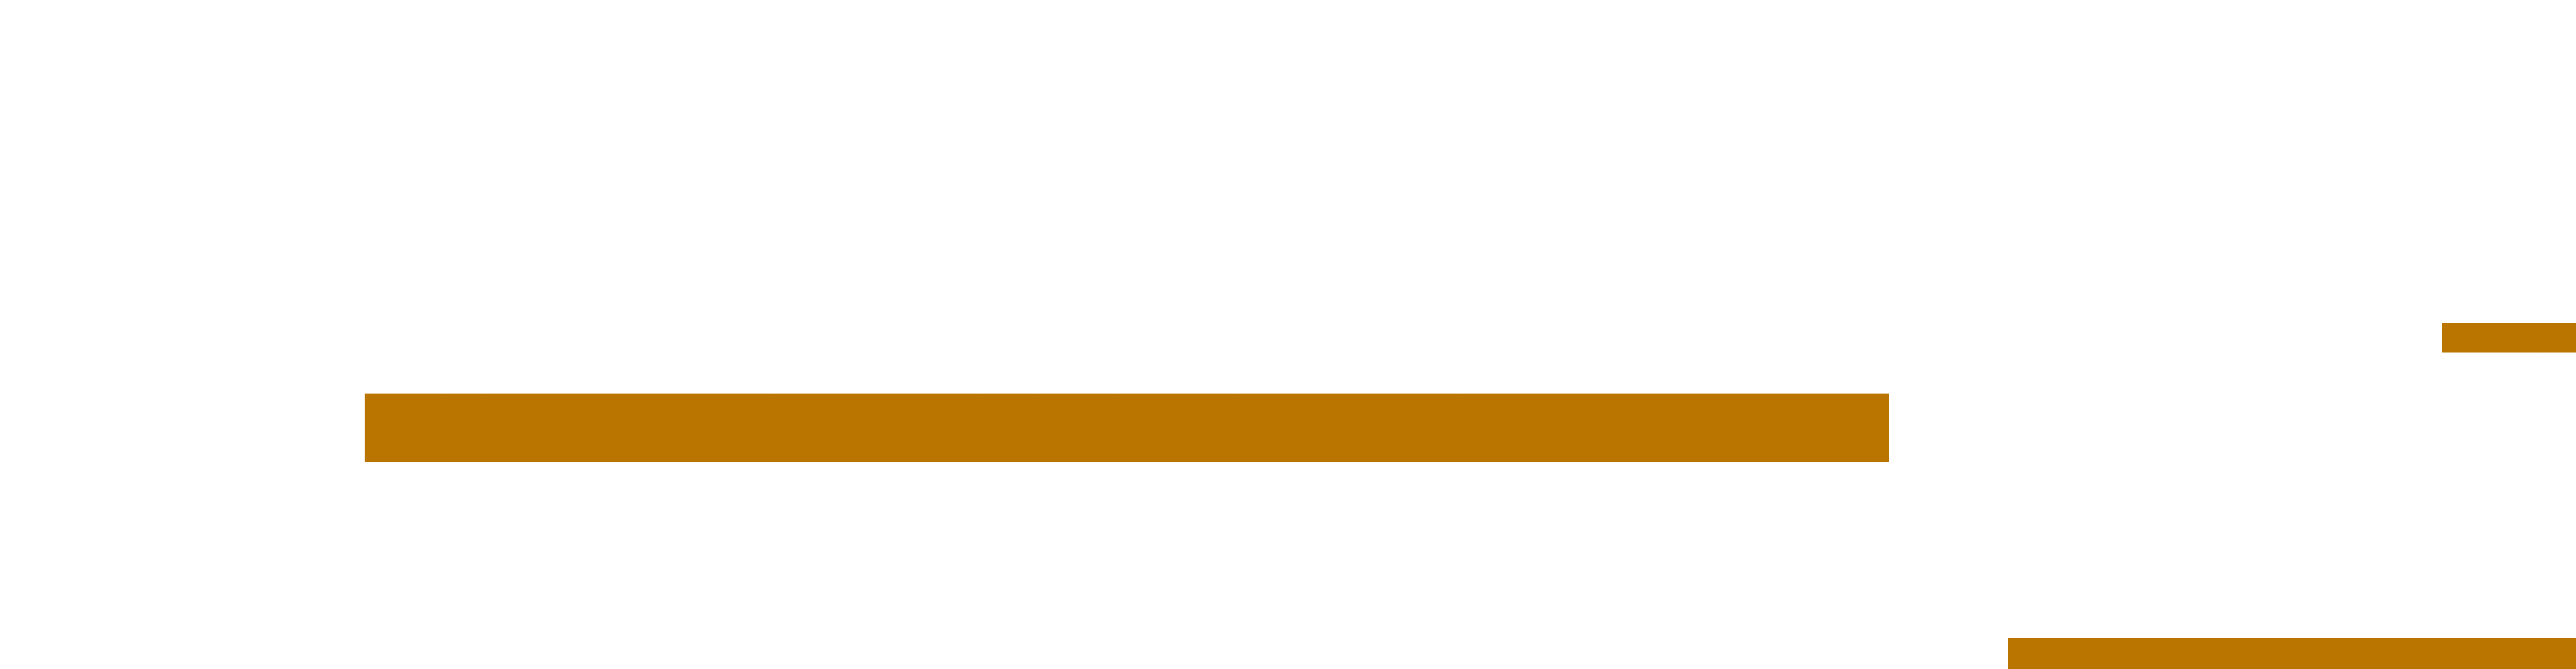 Marathon Finishing Systems - Built to Run